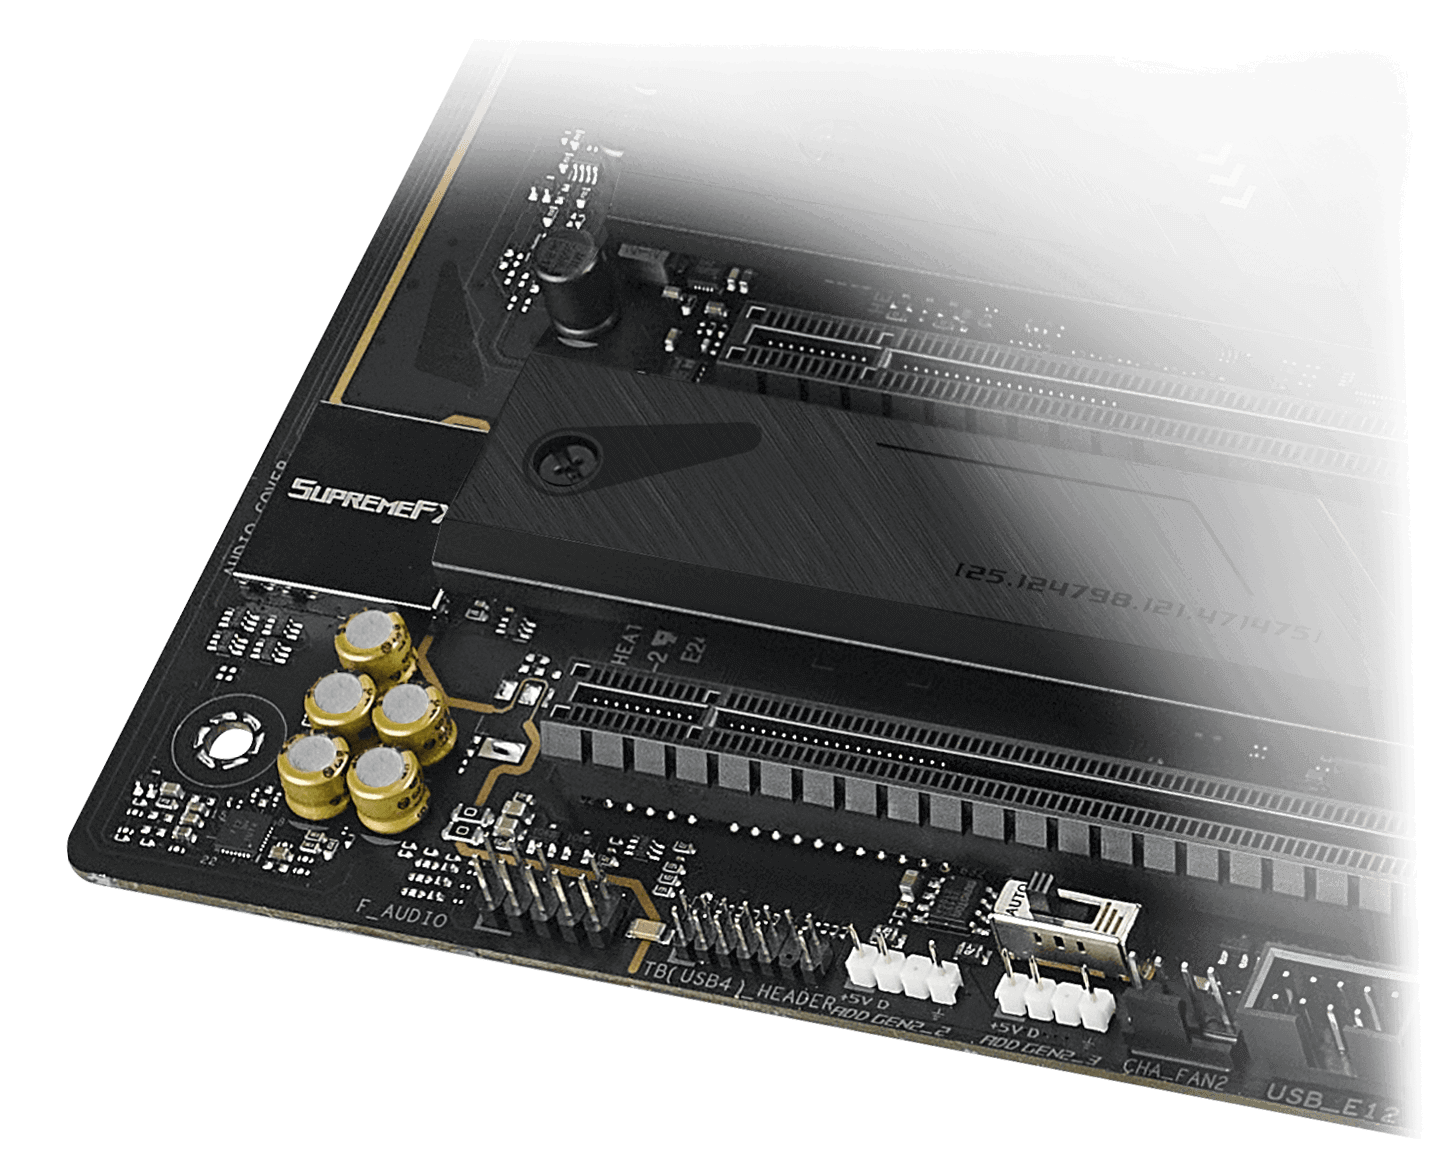 The Strix Z790-E II motherboard features SupremeFX audio